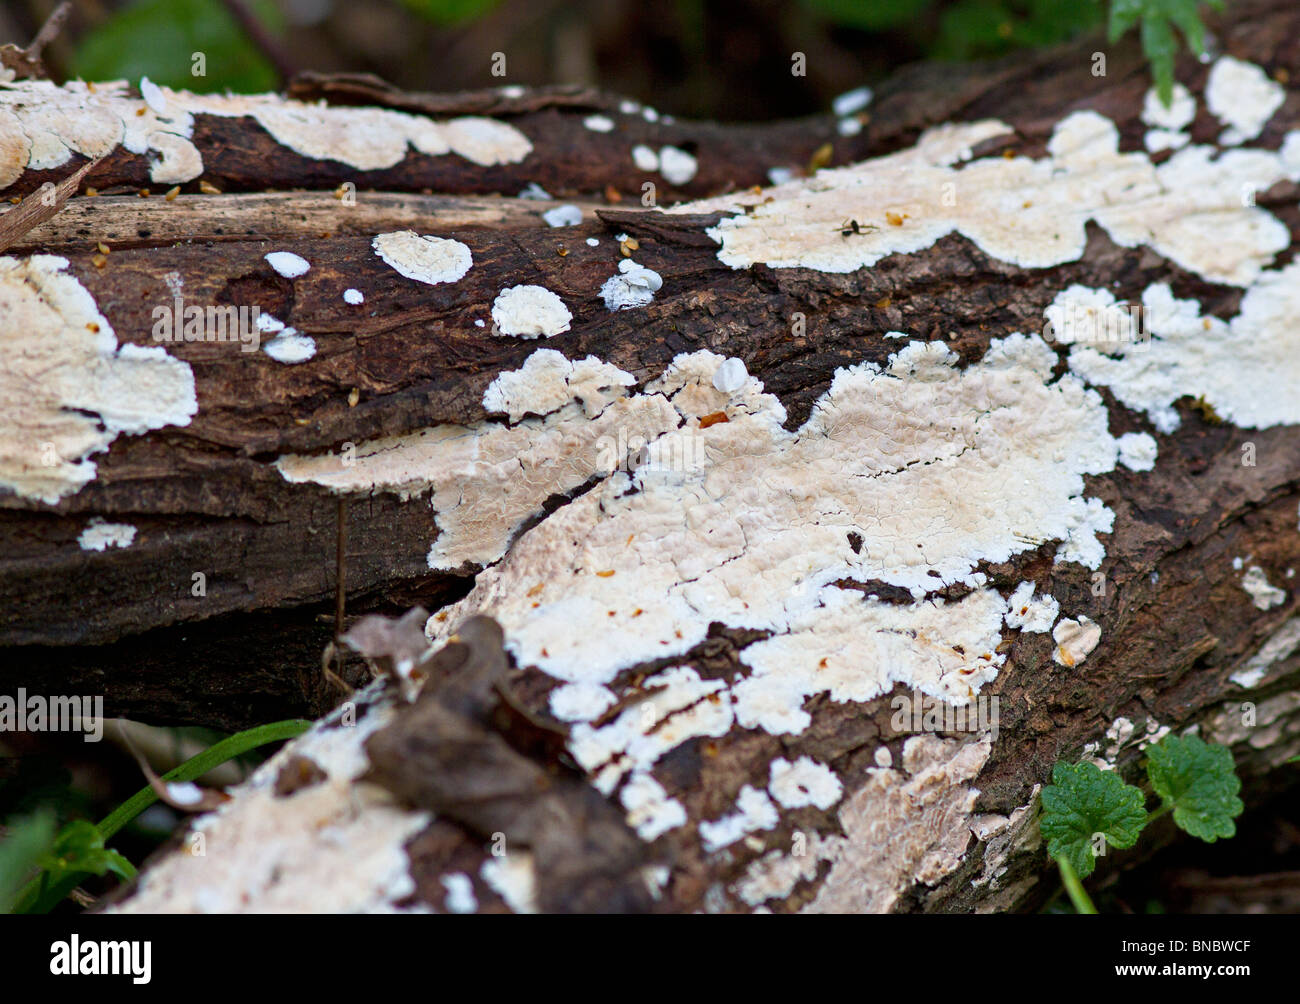 White Crustose lichen growing on fallen tree bark Stock Photo